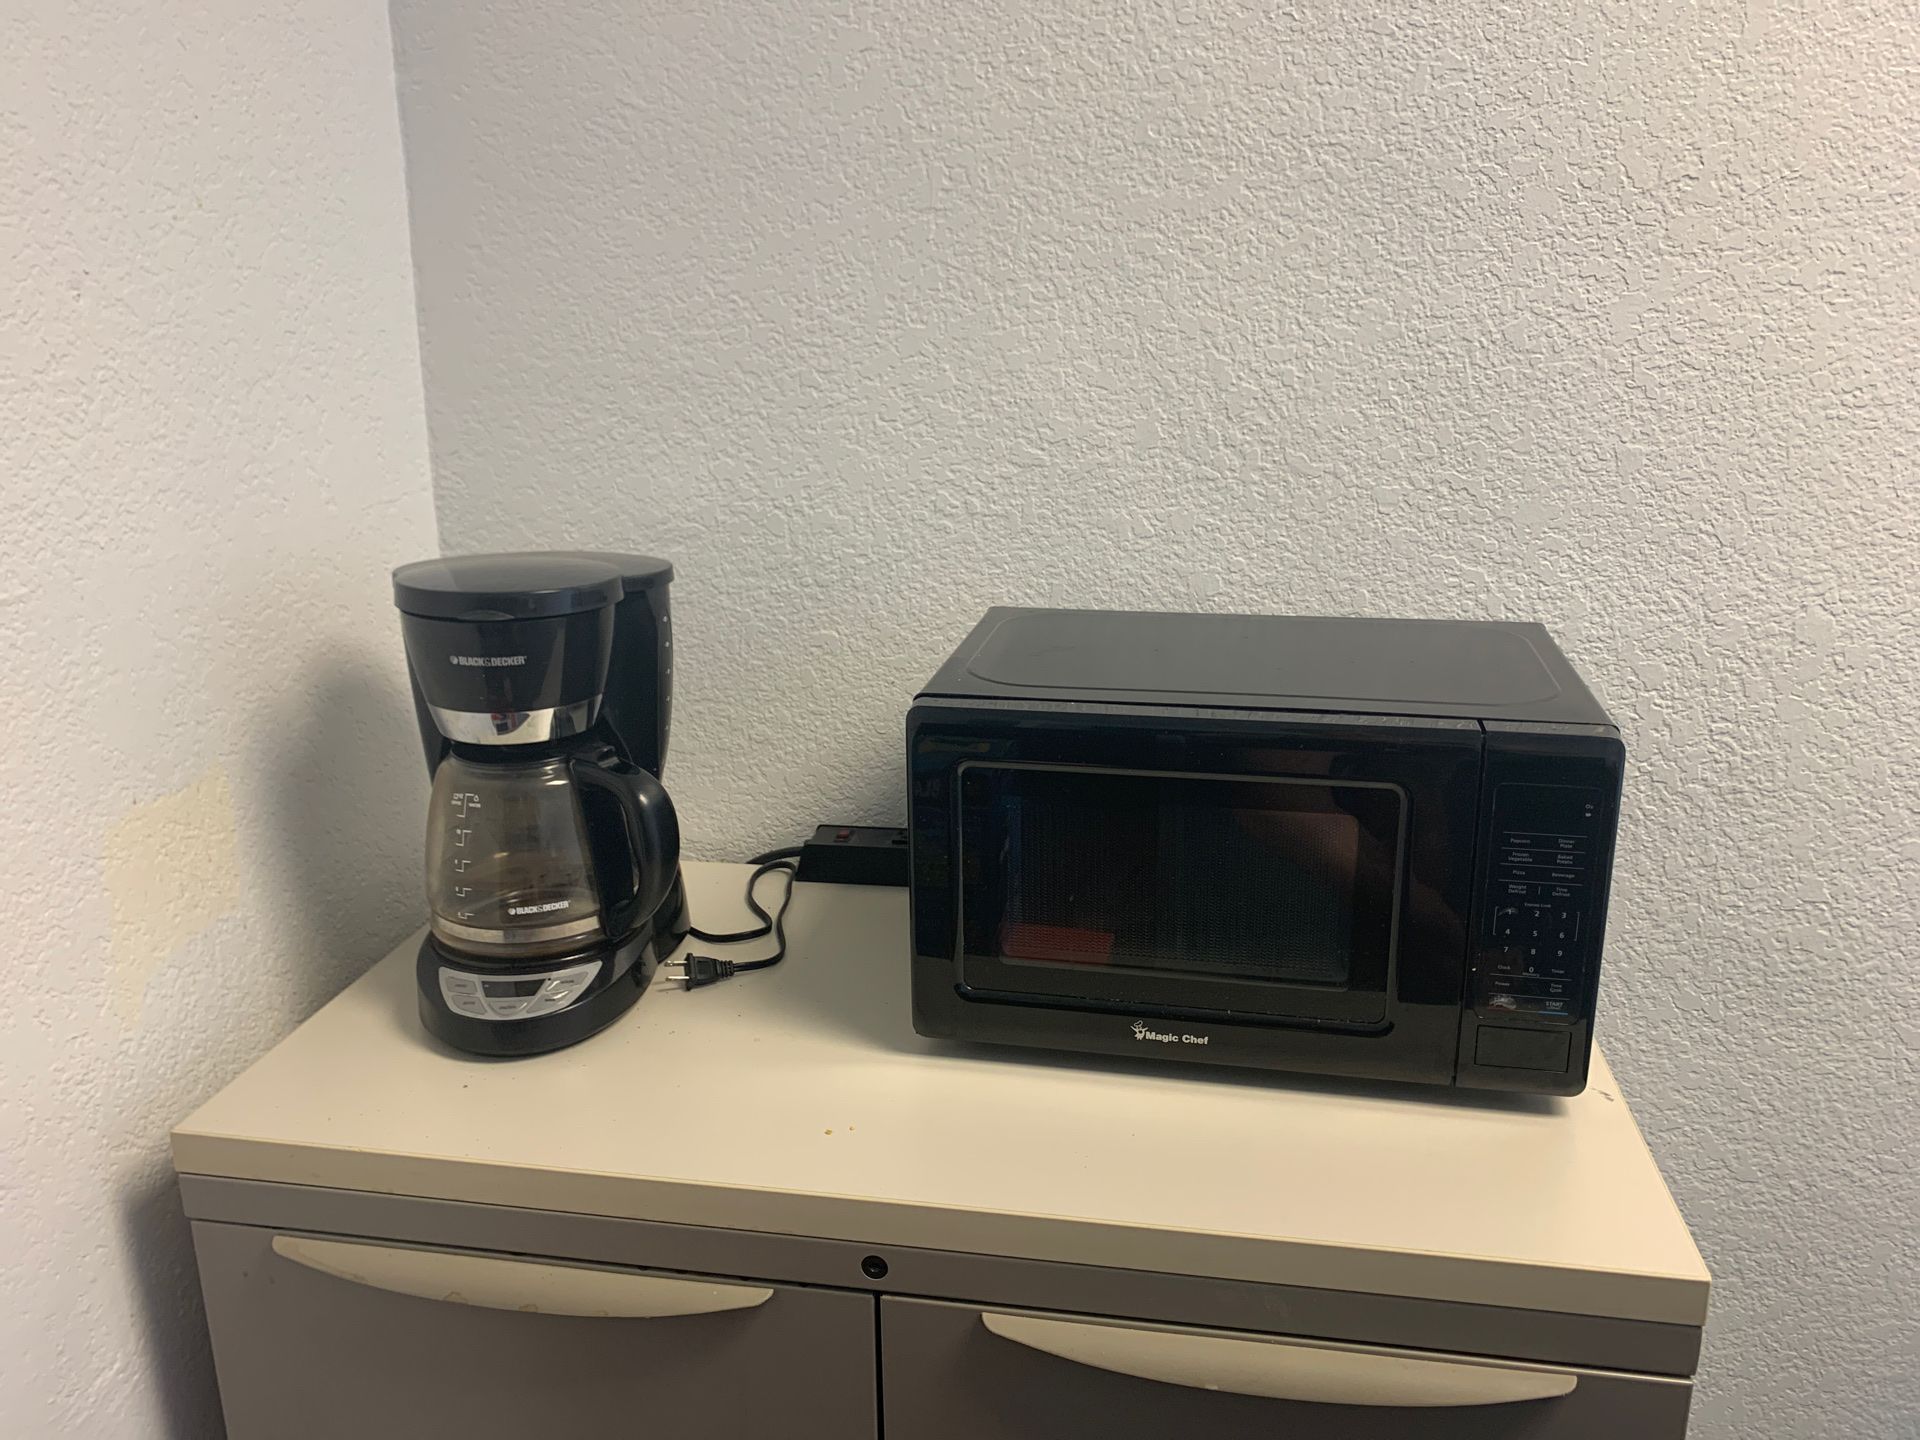 Coffee pot and microwave